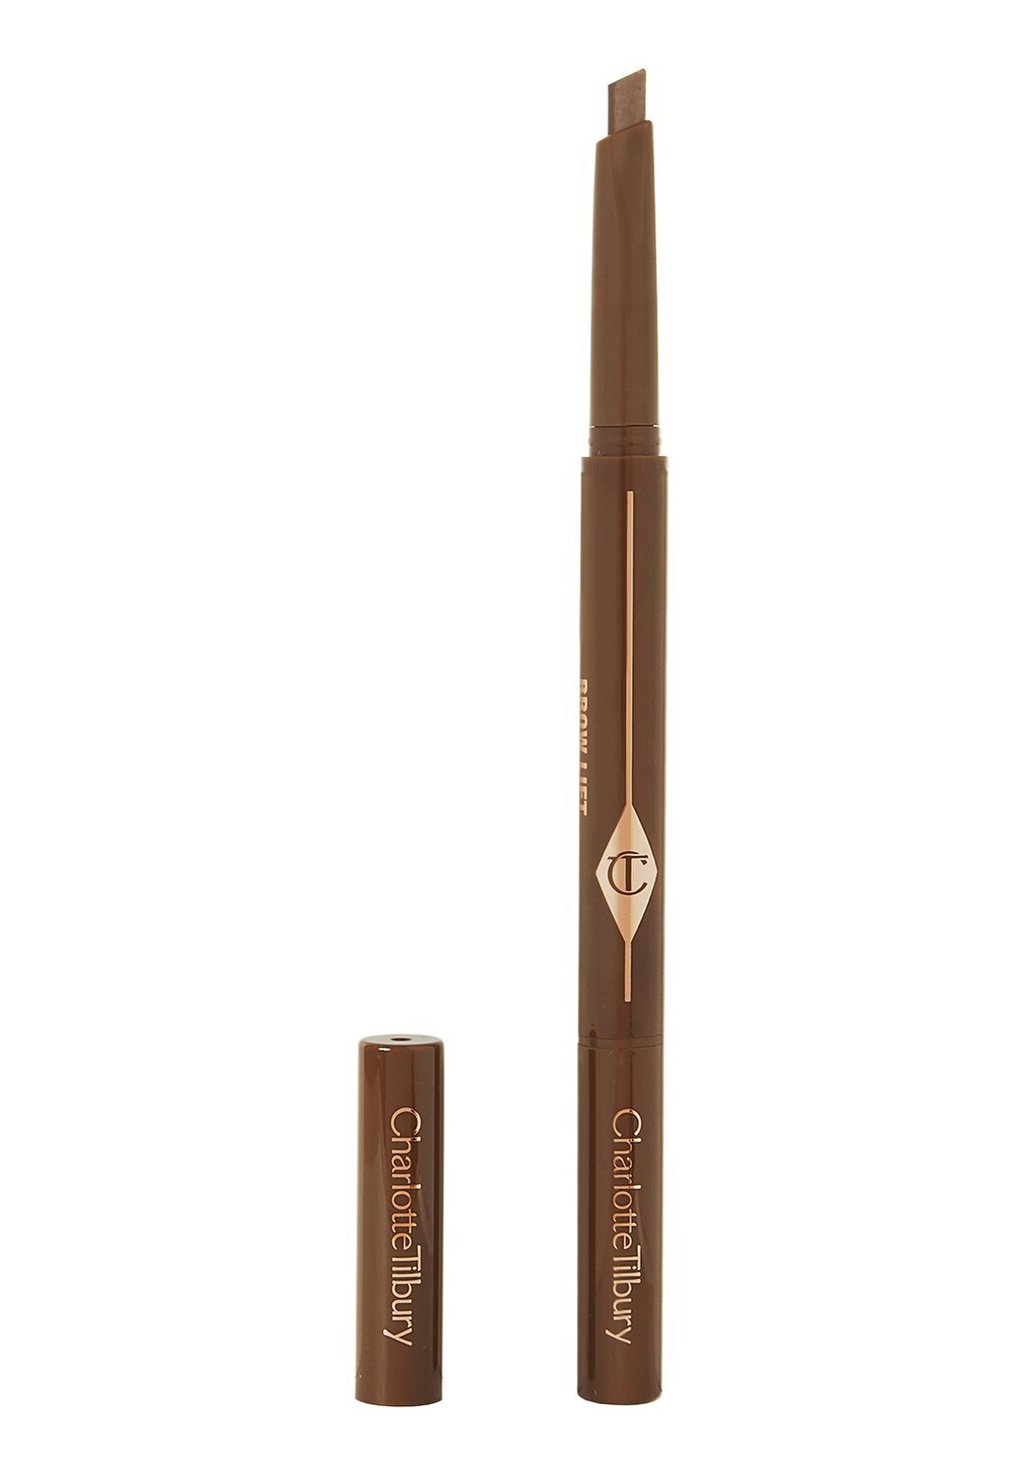 Карандаш для бровей BROW LIFT Charlotte Tilbury, цвет natural black карандаш для бровей charlotte tilbury brow lift оттенок natural brown